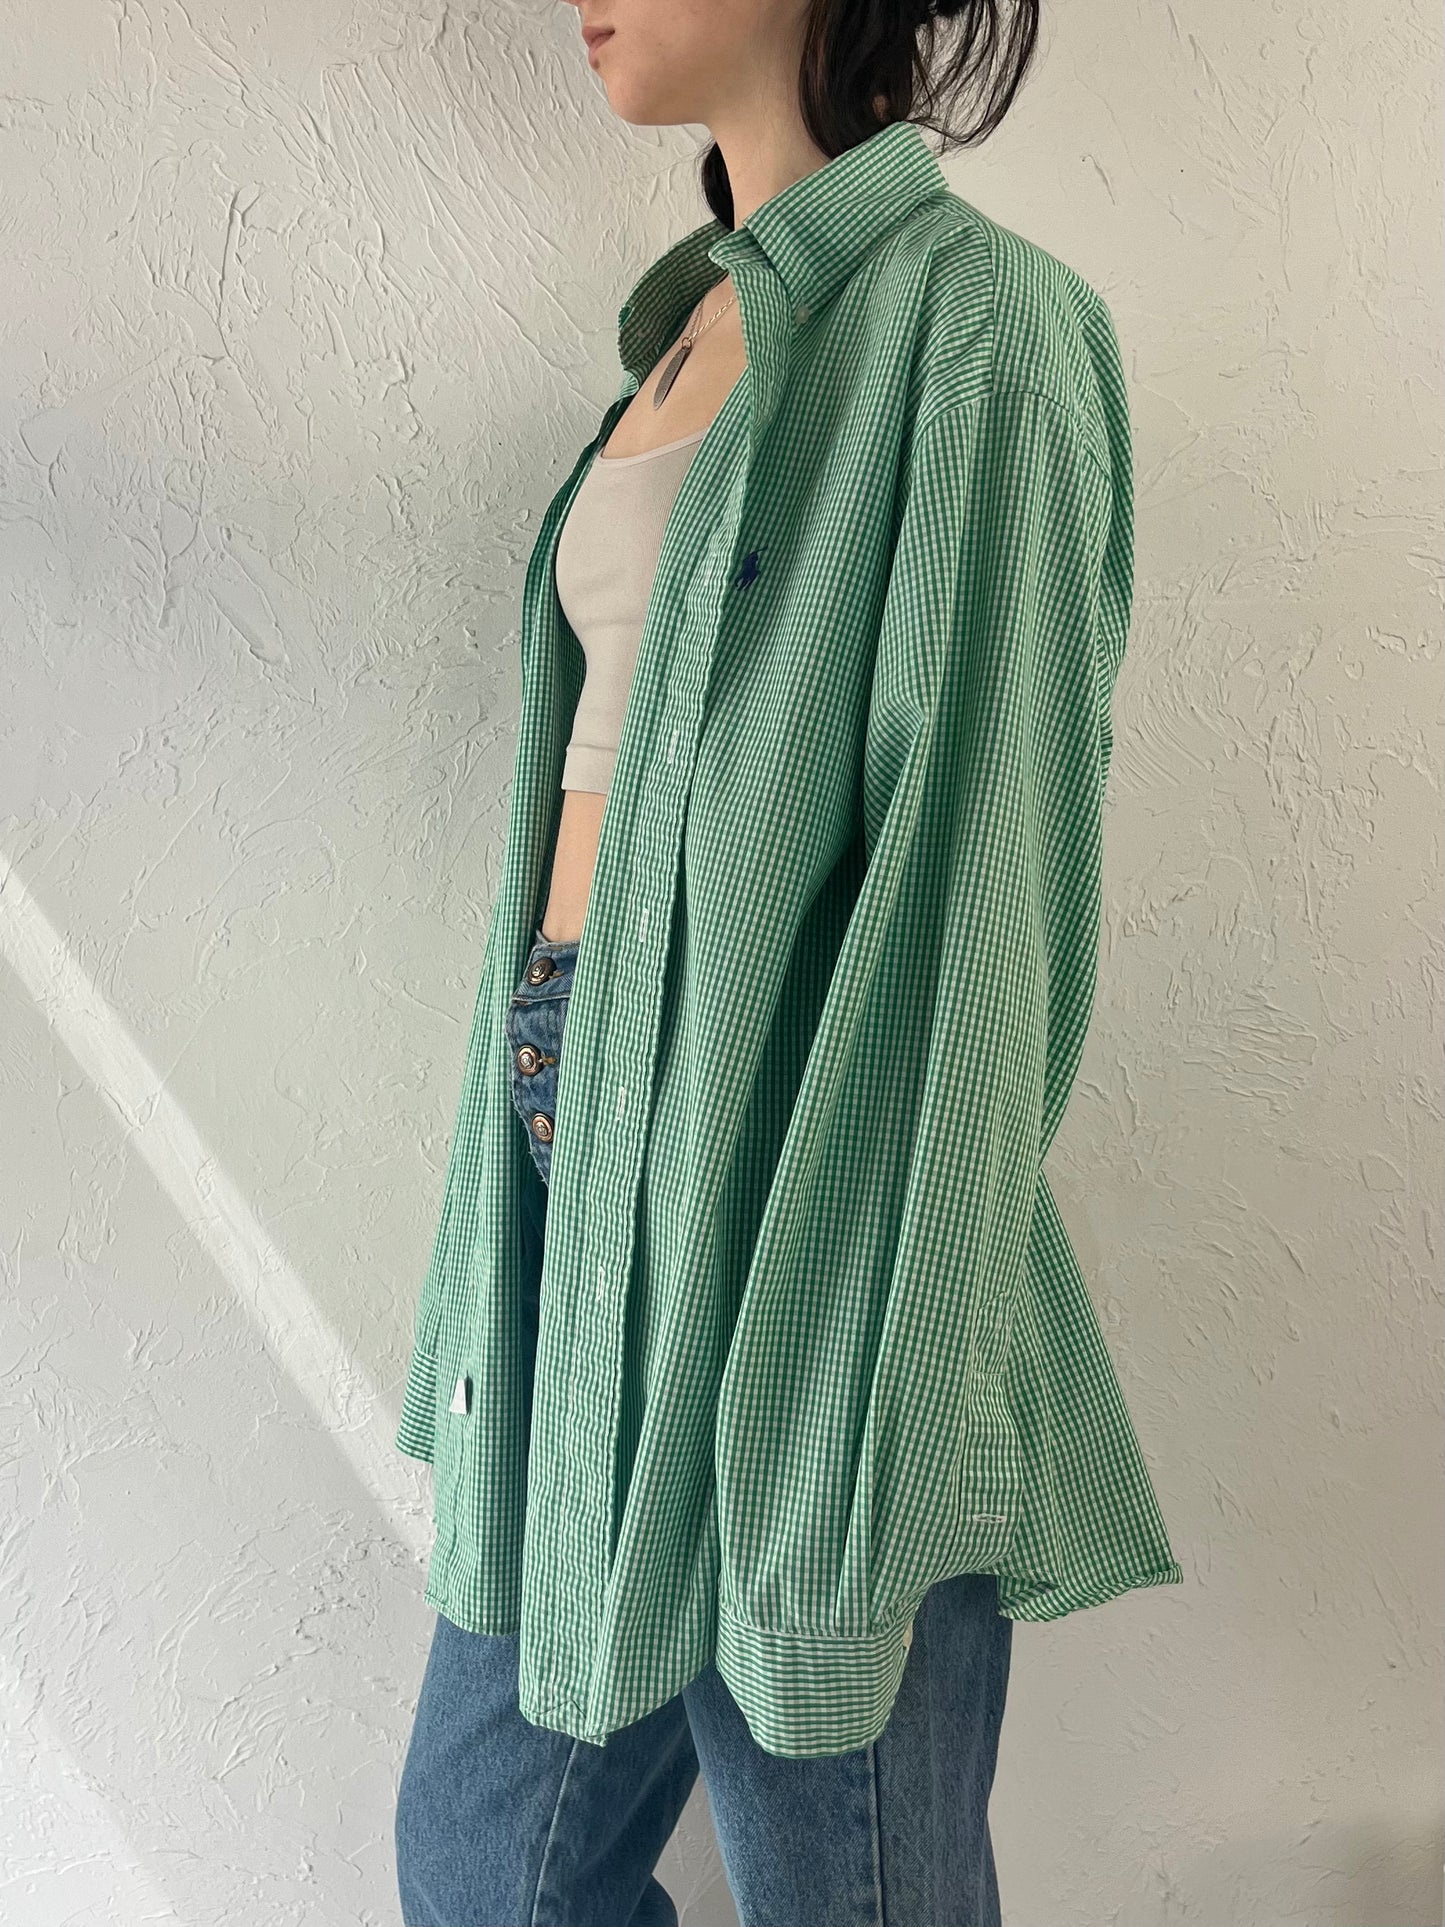 Y2K 'Ralph Lauren' Green Gingham Shirt / Large